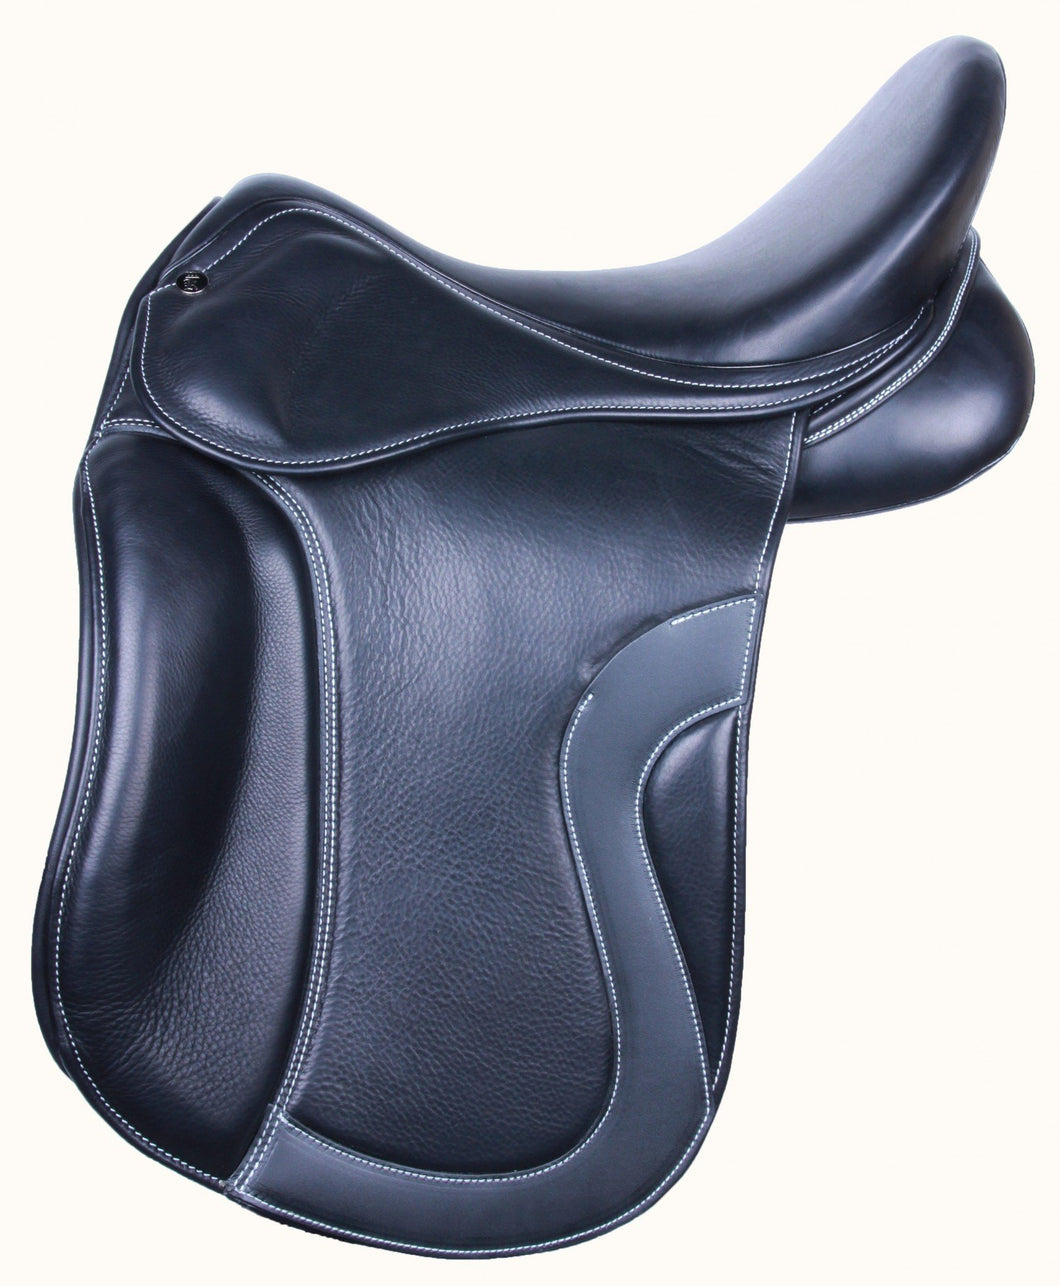 Kingsley D1 Saddle with Velcro Knee Blocks